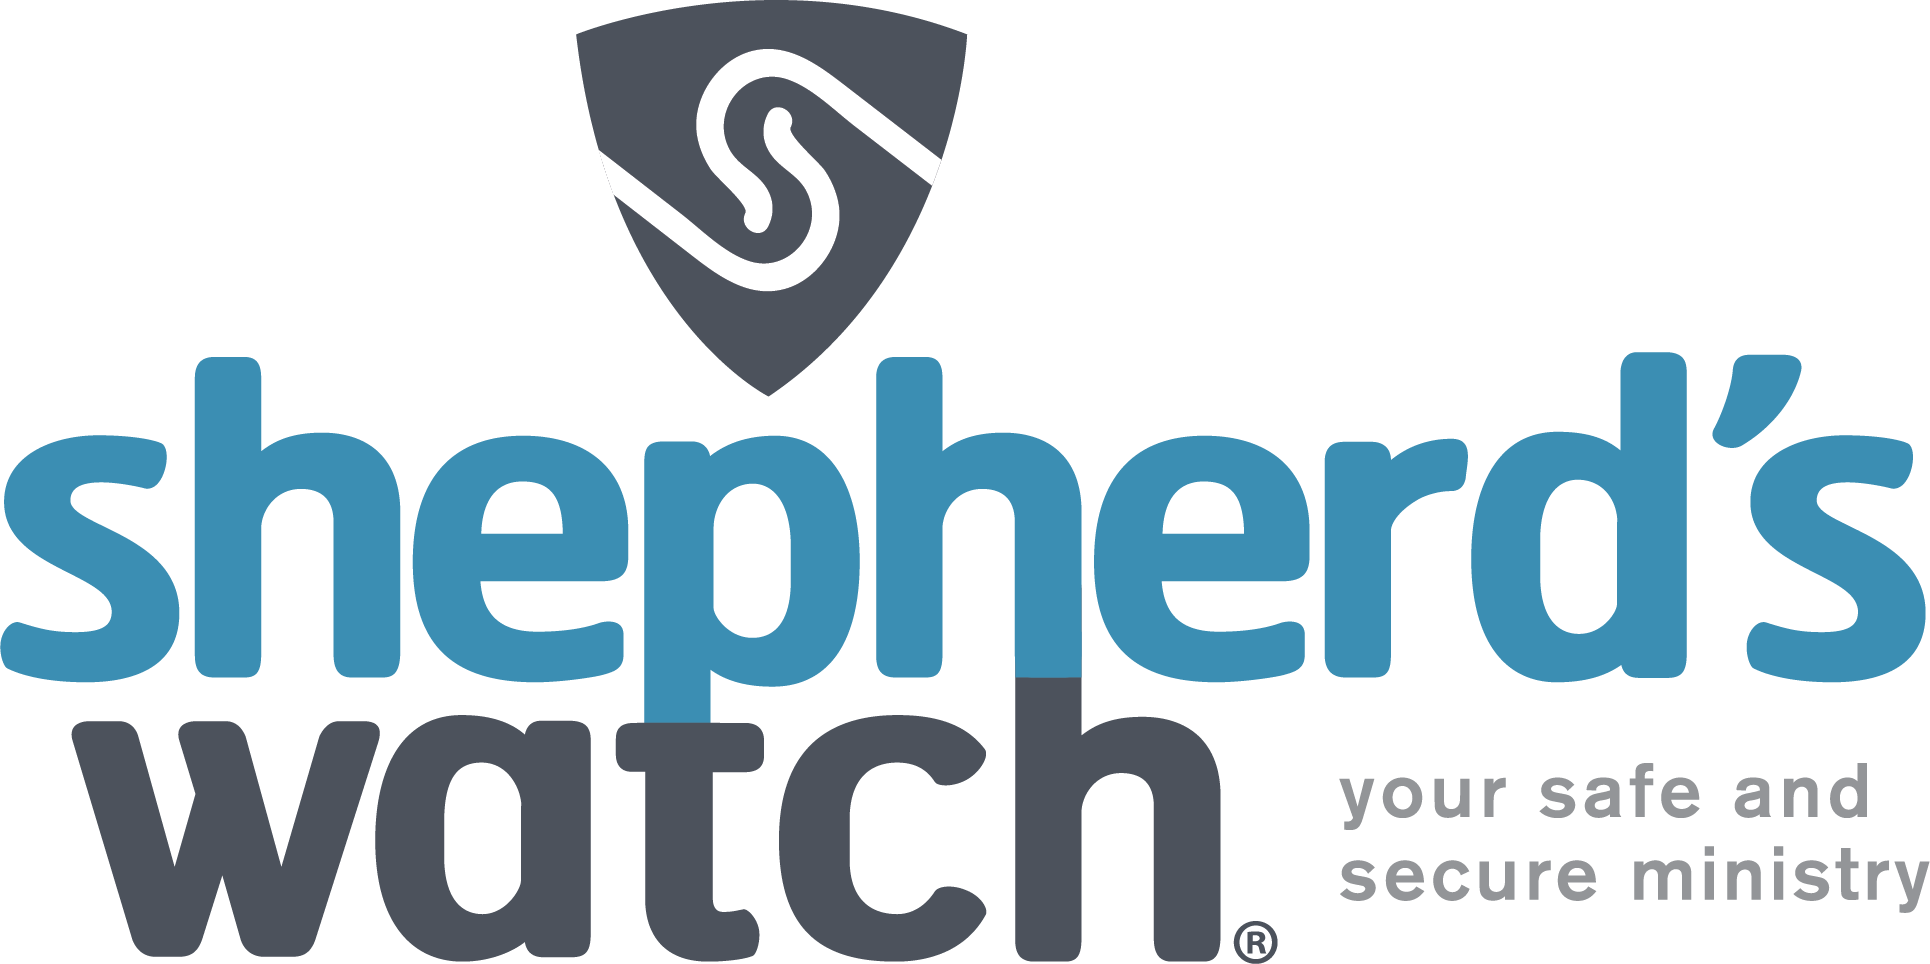 Shepherds Watch Logo